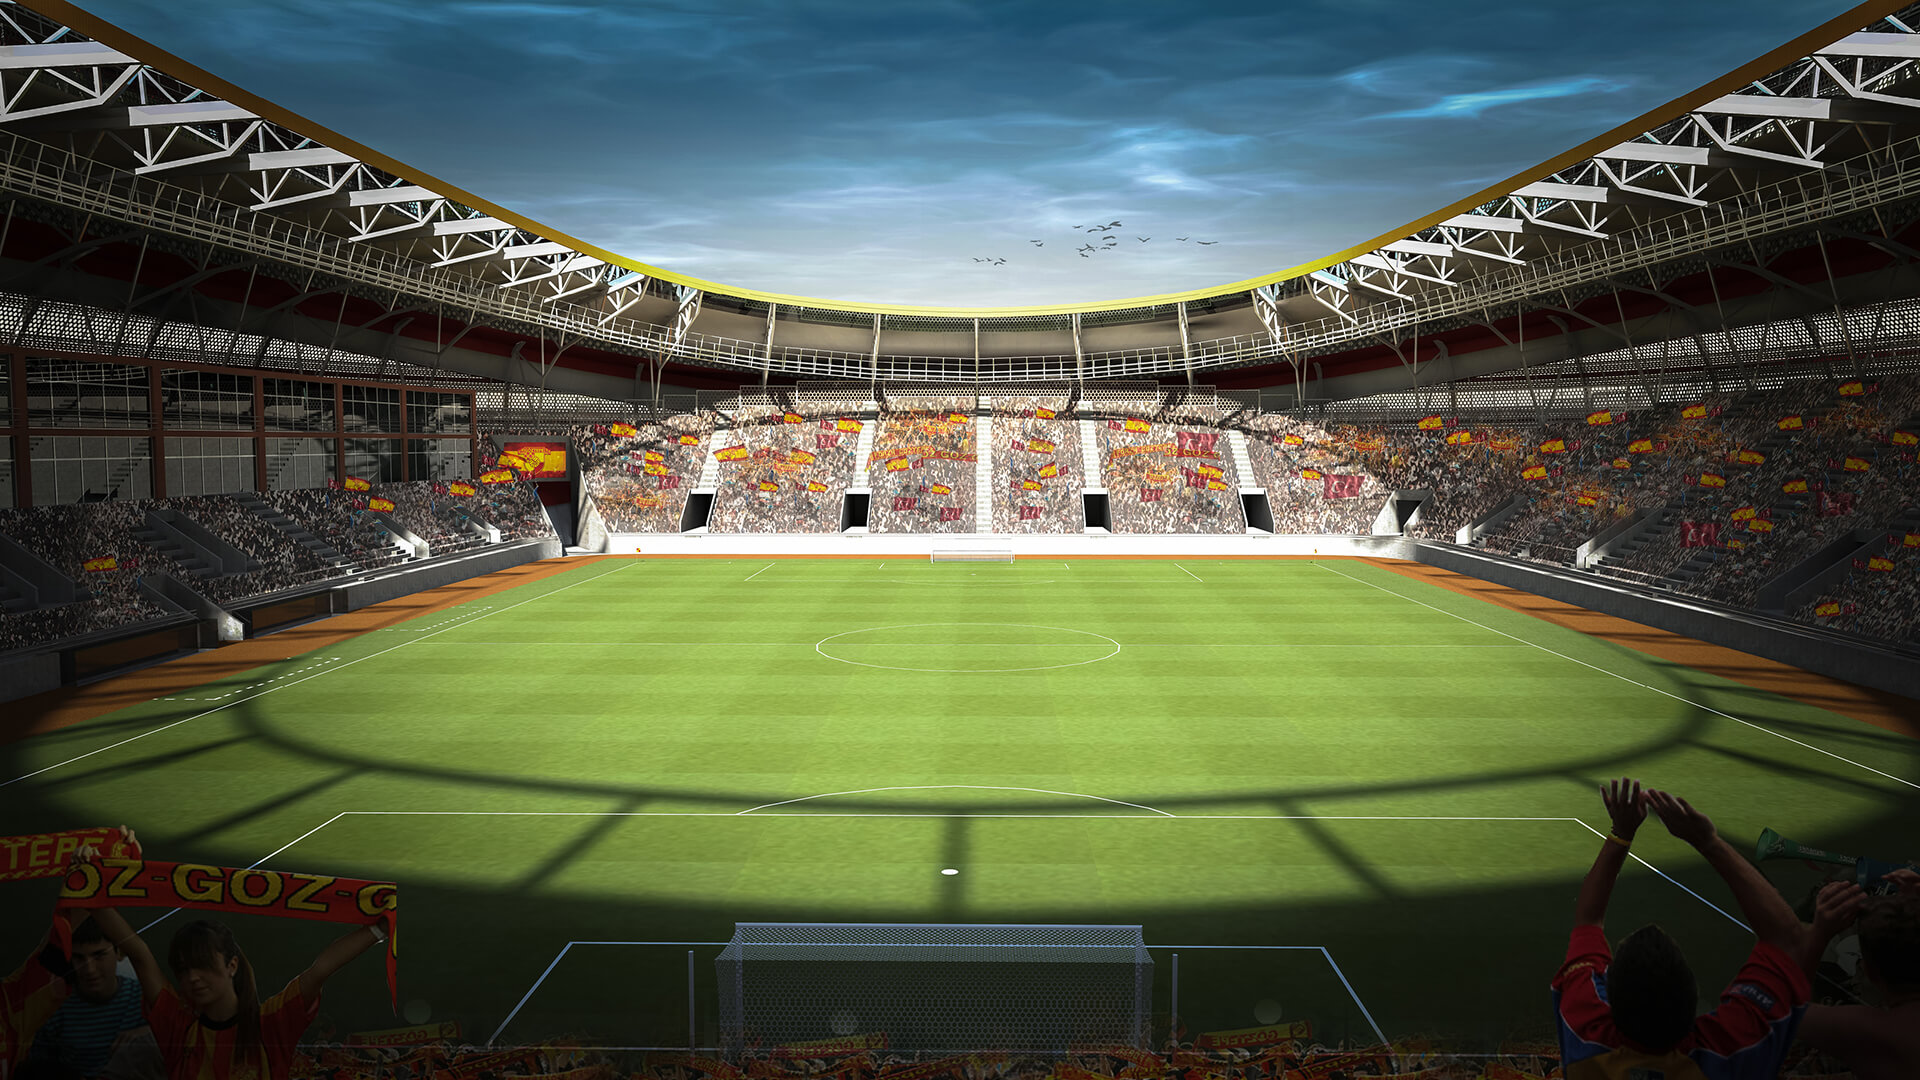 İzmir Göztepe Arena Stadyumu (15.000 Kapasite)